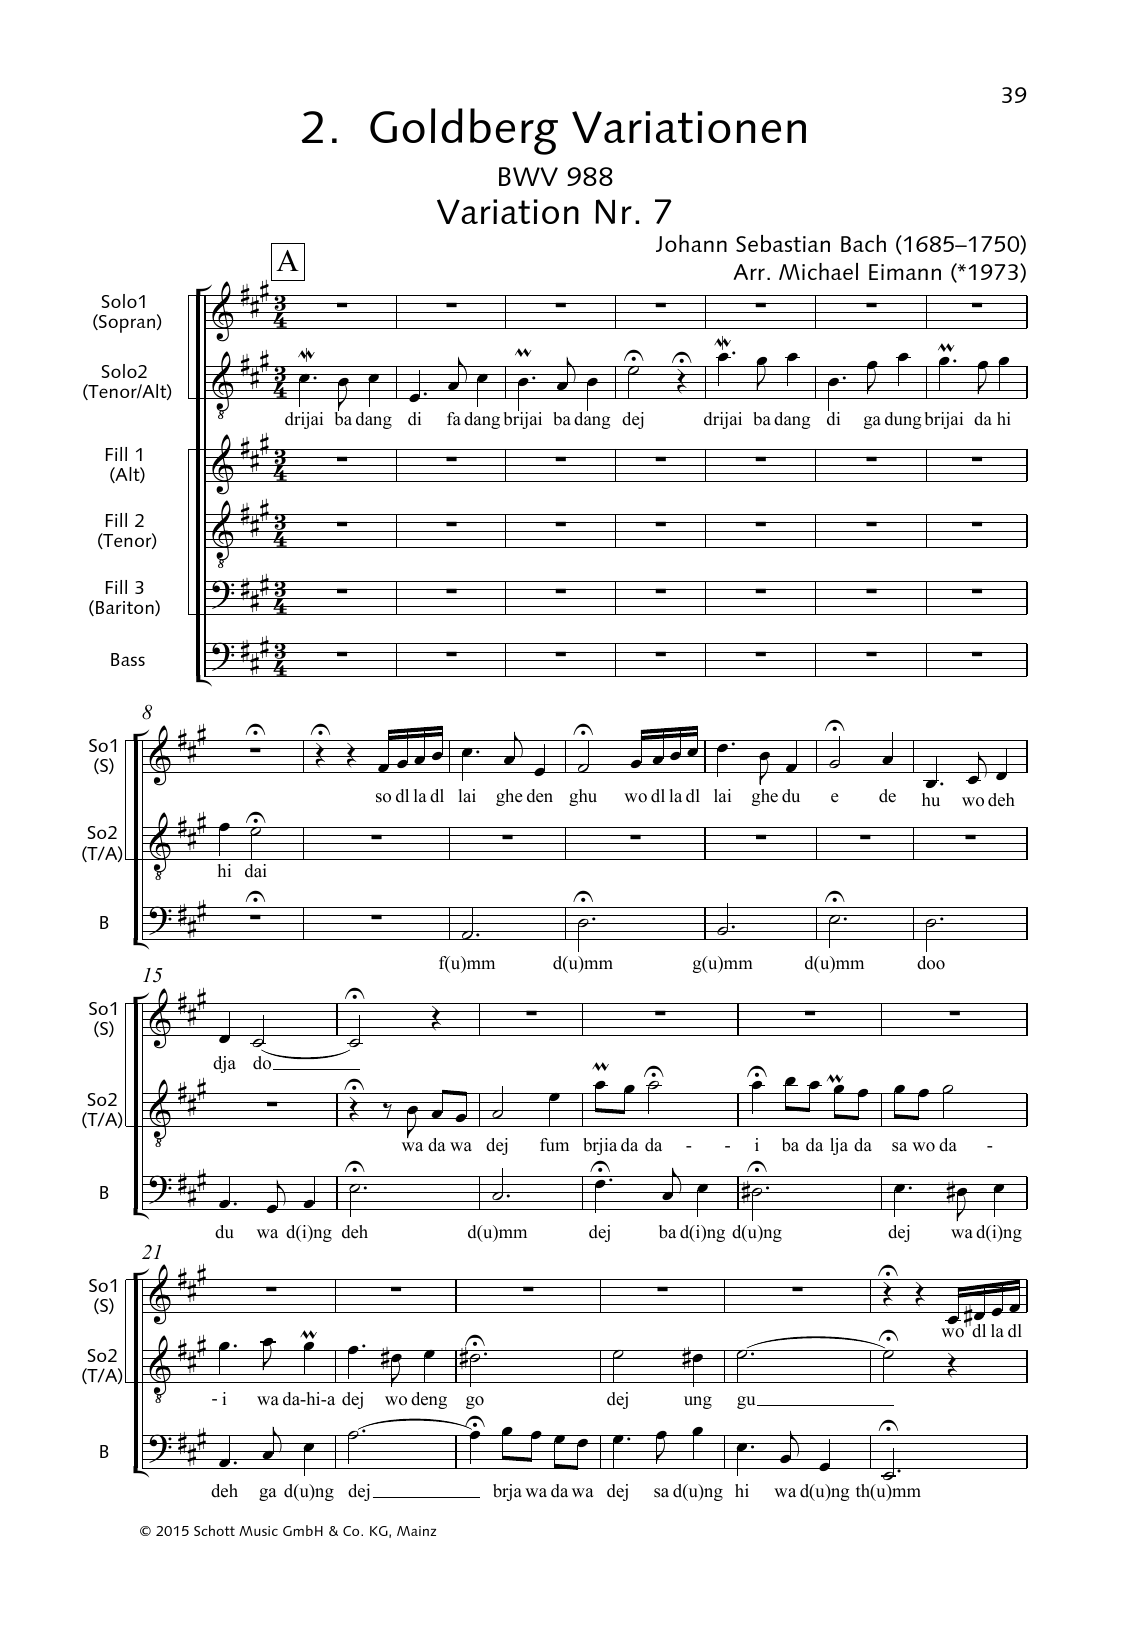 Johann Sebastian Bach Goldberg Variations, Variation No. 7 Sheet Music Notes & Chords for Choral - Download or Print PDF